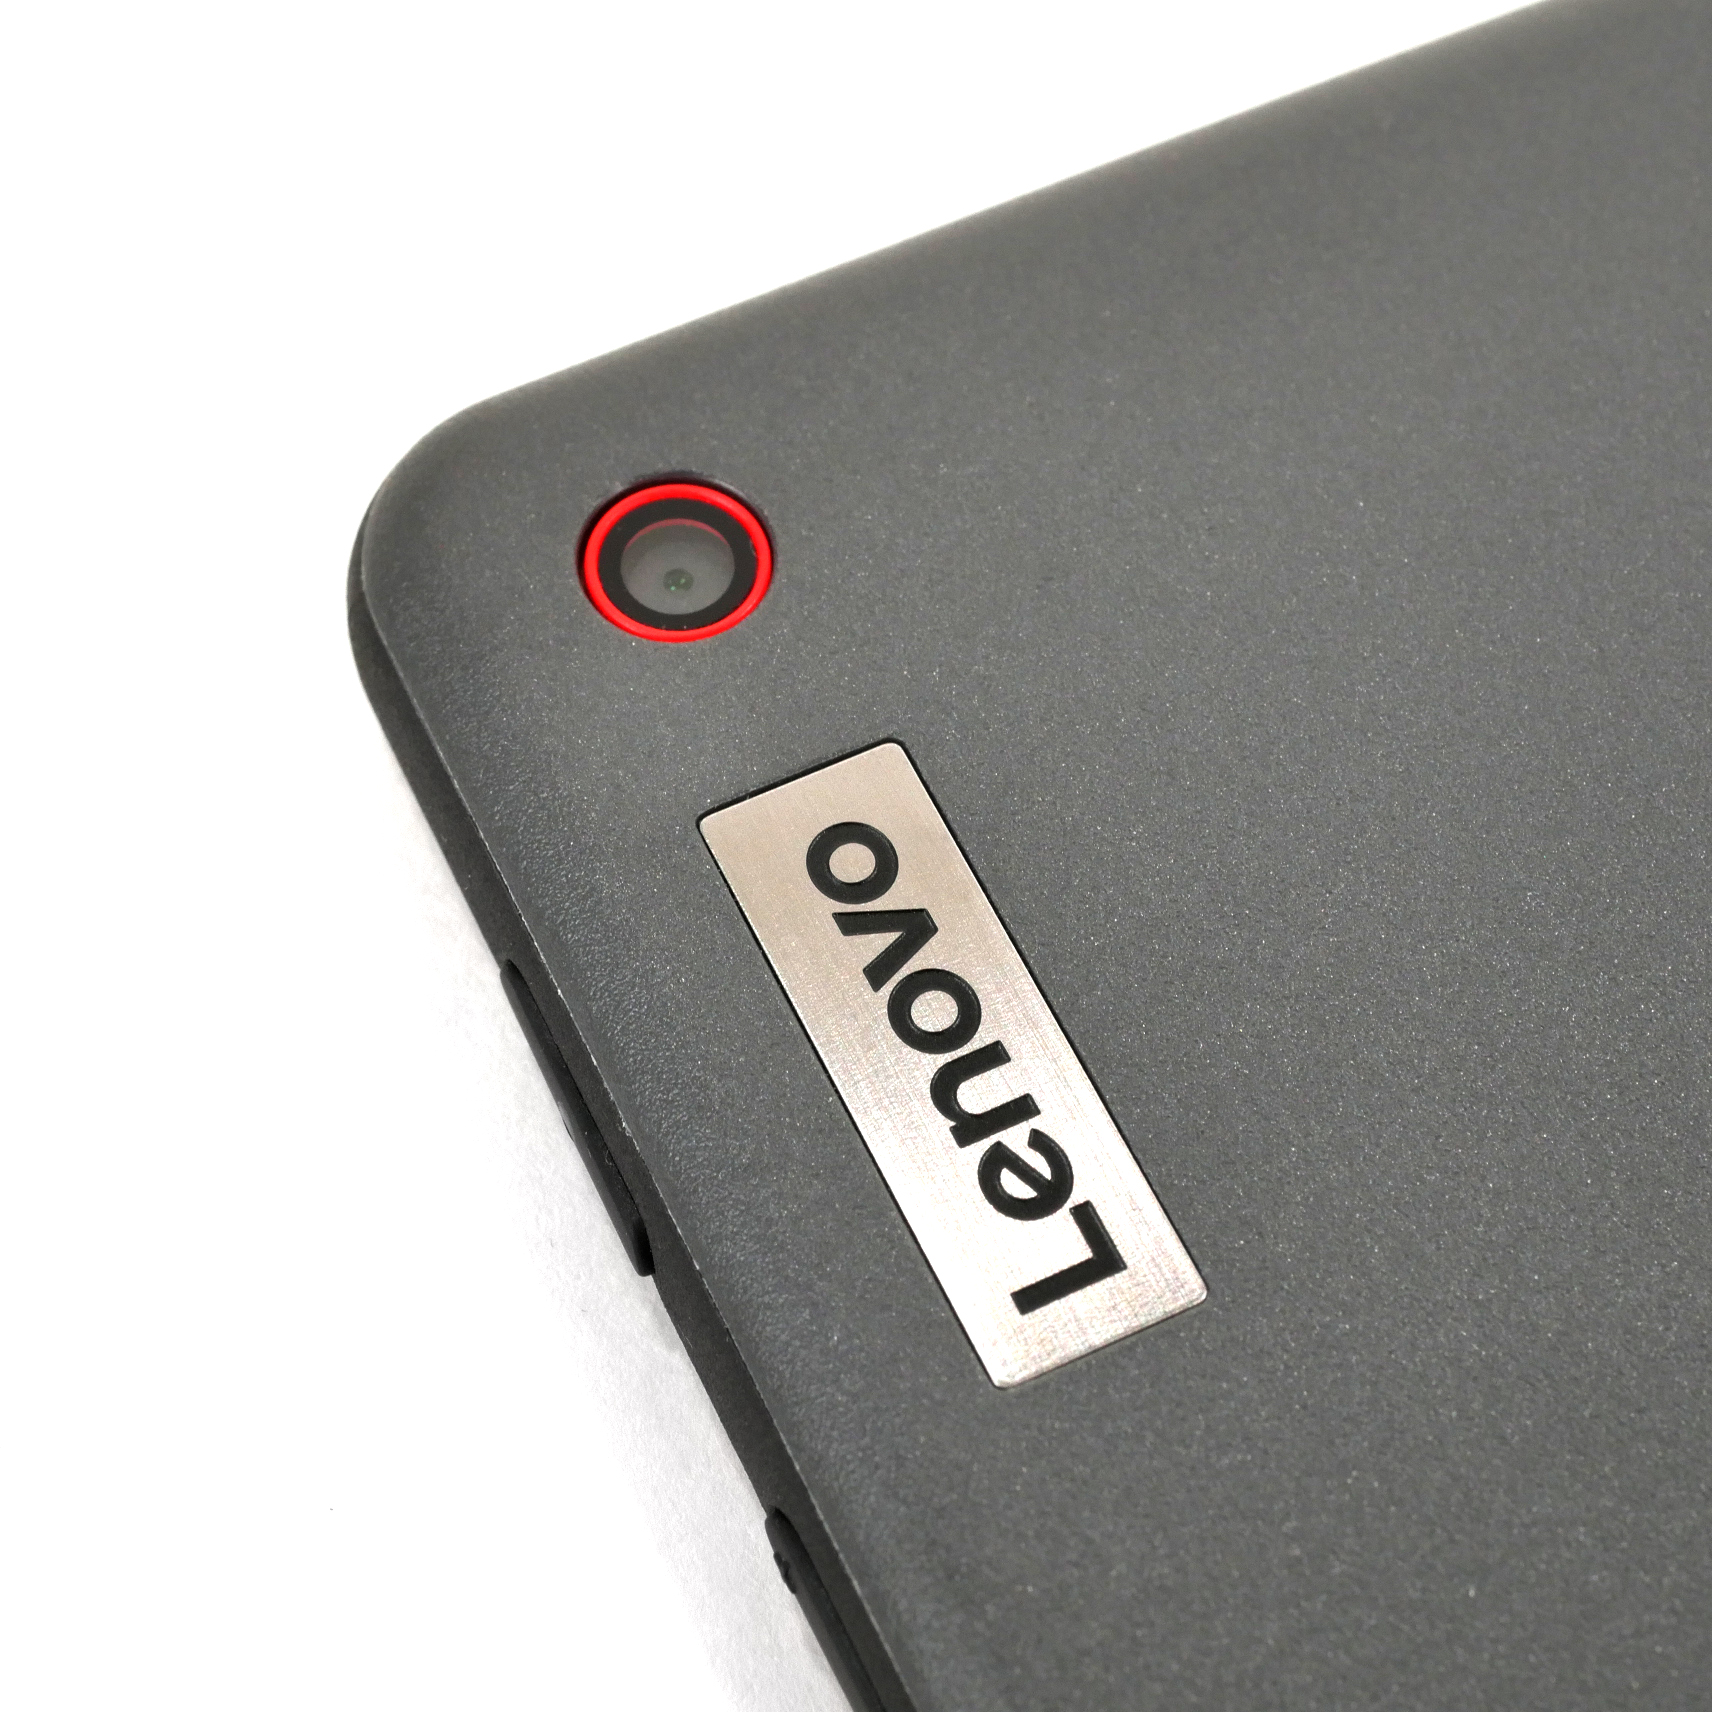 Lenovo 10e Chromebook Tablet 10.1" MediaTek 8183 4GB RAM 32GB eMMC - 82AM0002US